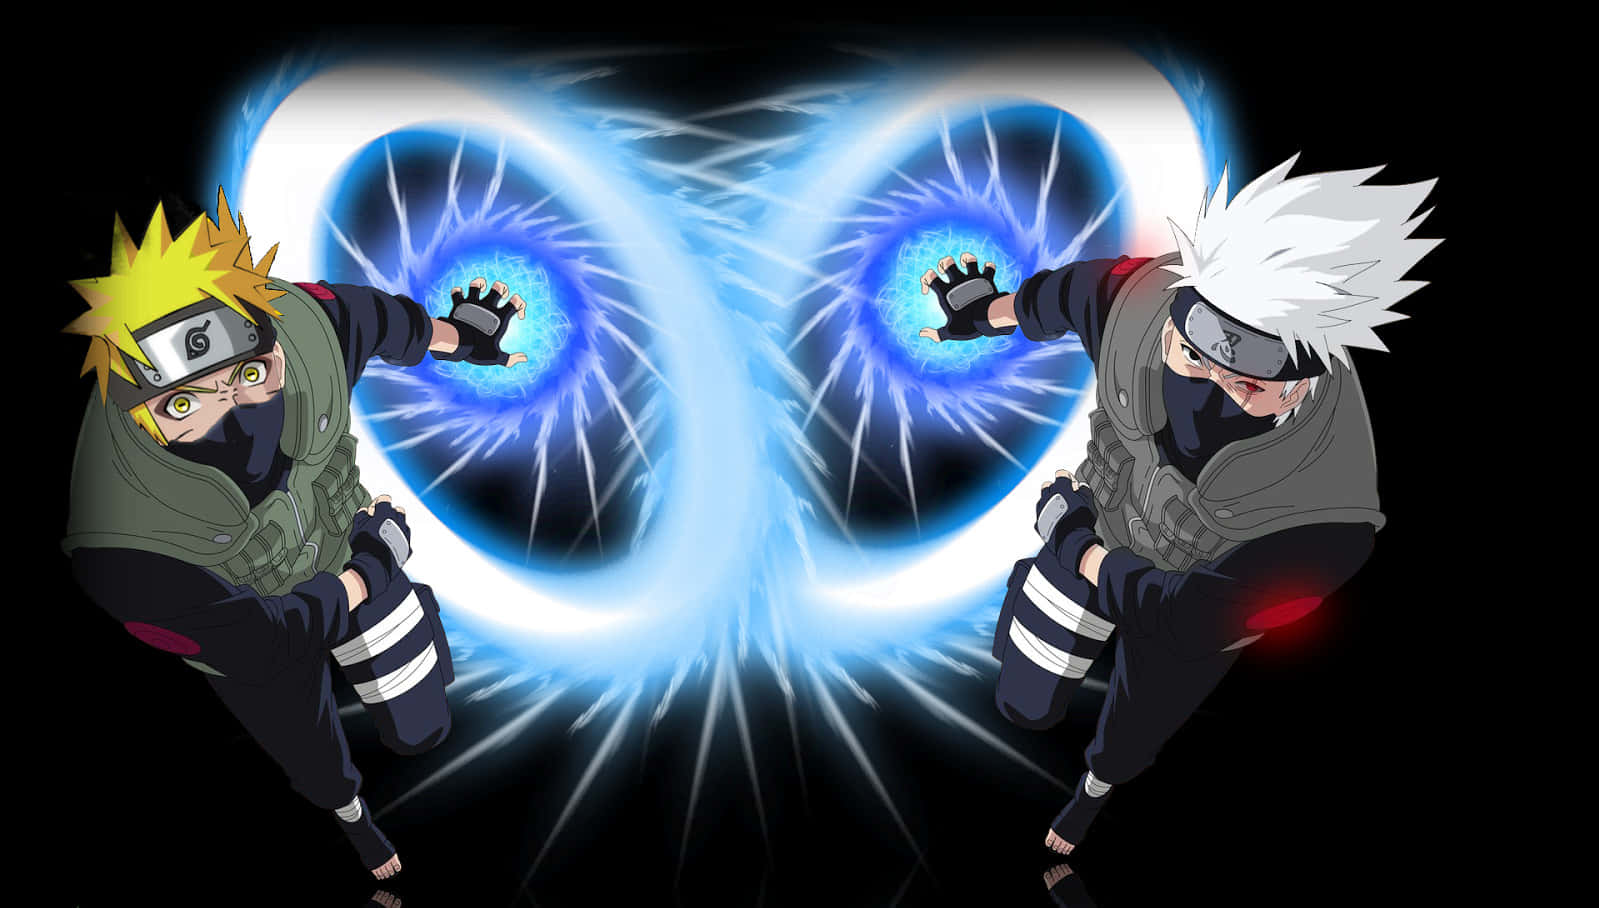 Dynamic Duo - Kakashi and Naruto in Action Wallpaper